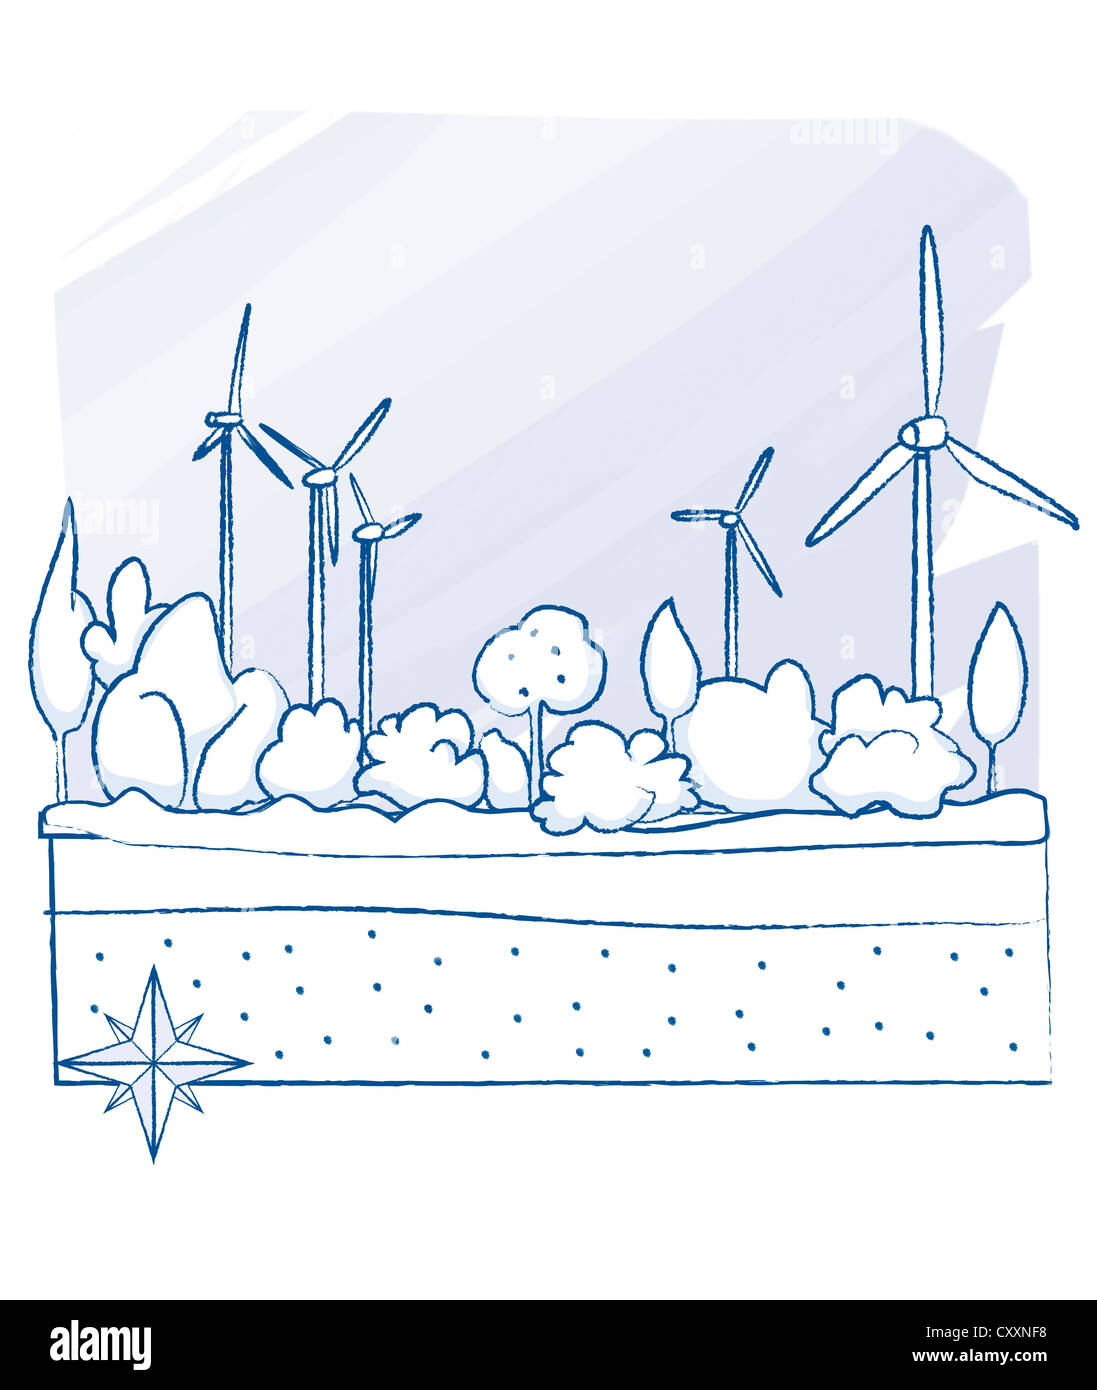 Wind turbines, ground cross-section, illustration Stock Photo